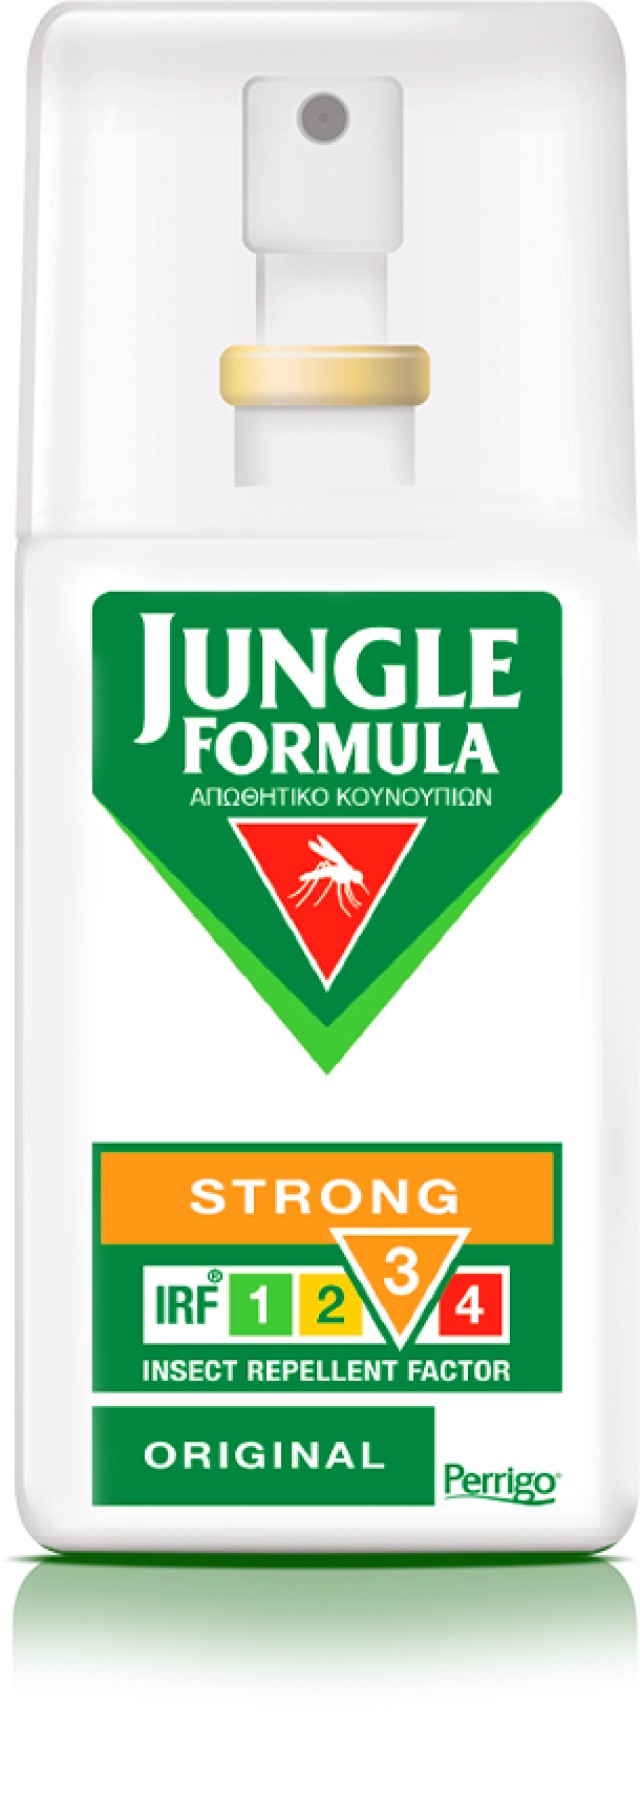 Jungle Formula Strong Original με IRF 3 Spray 75ml product photo